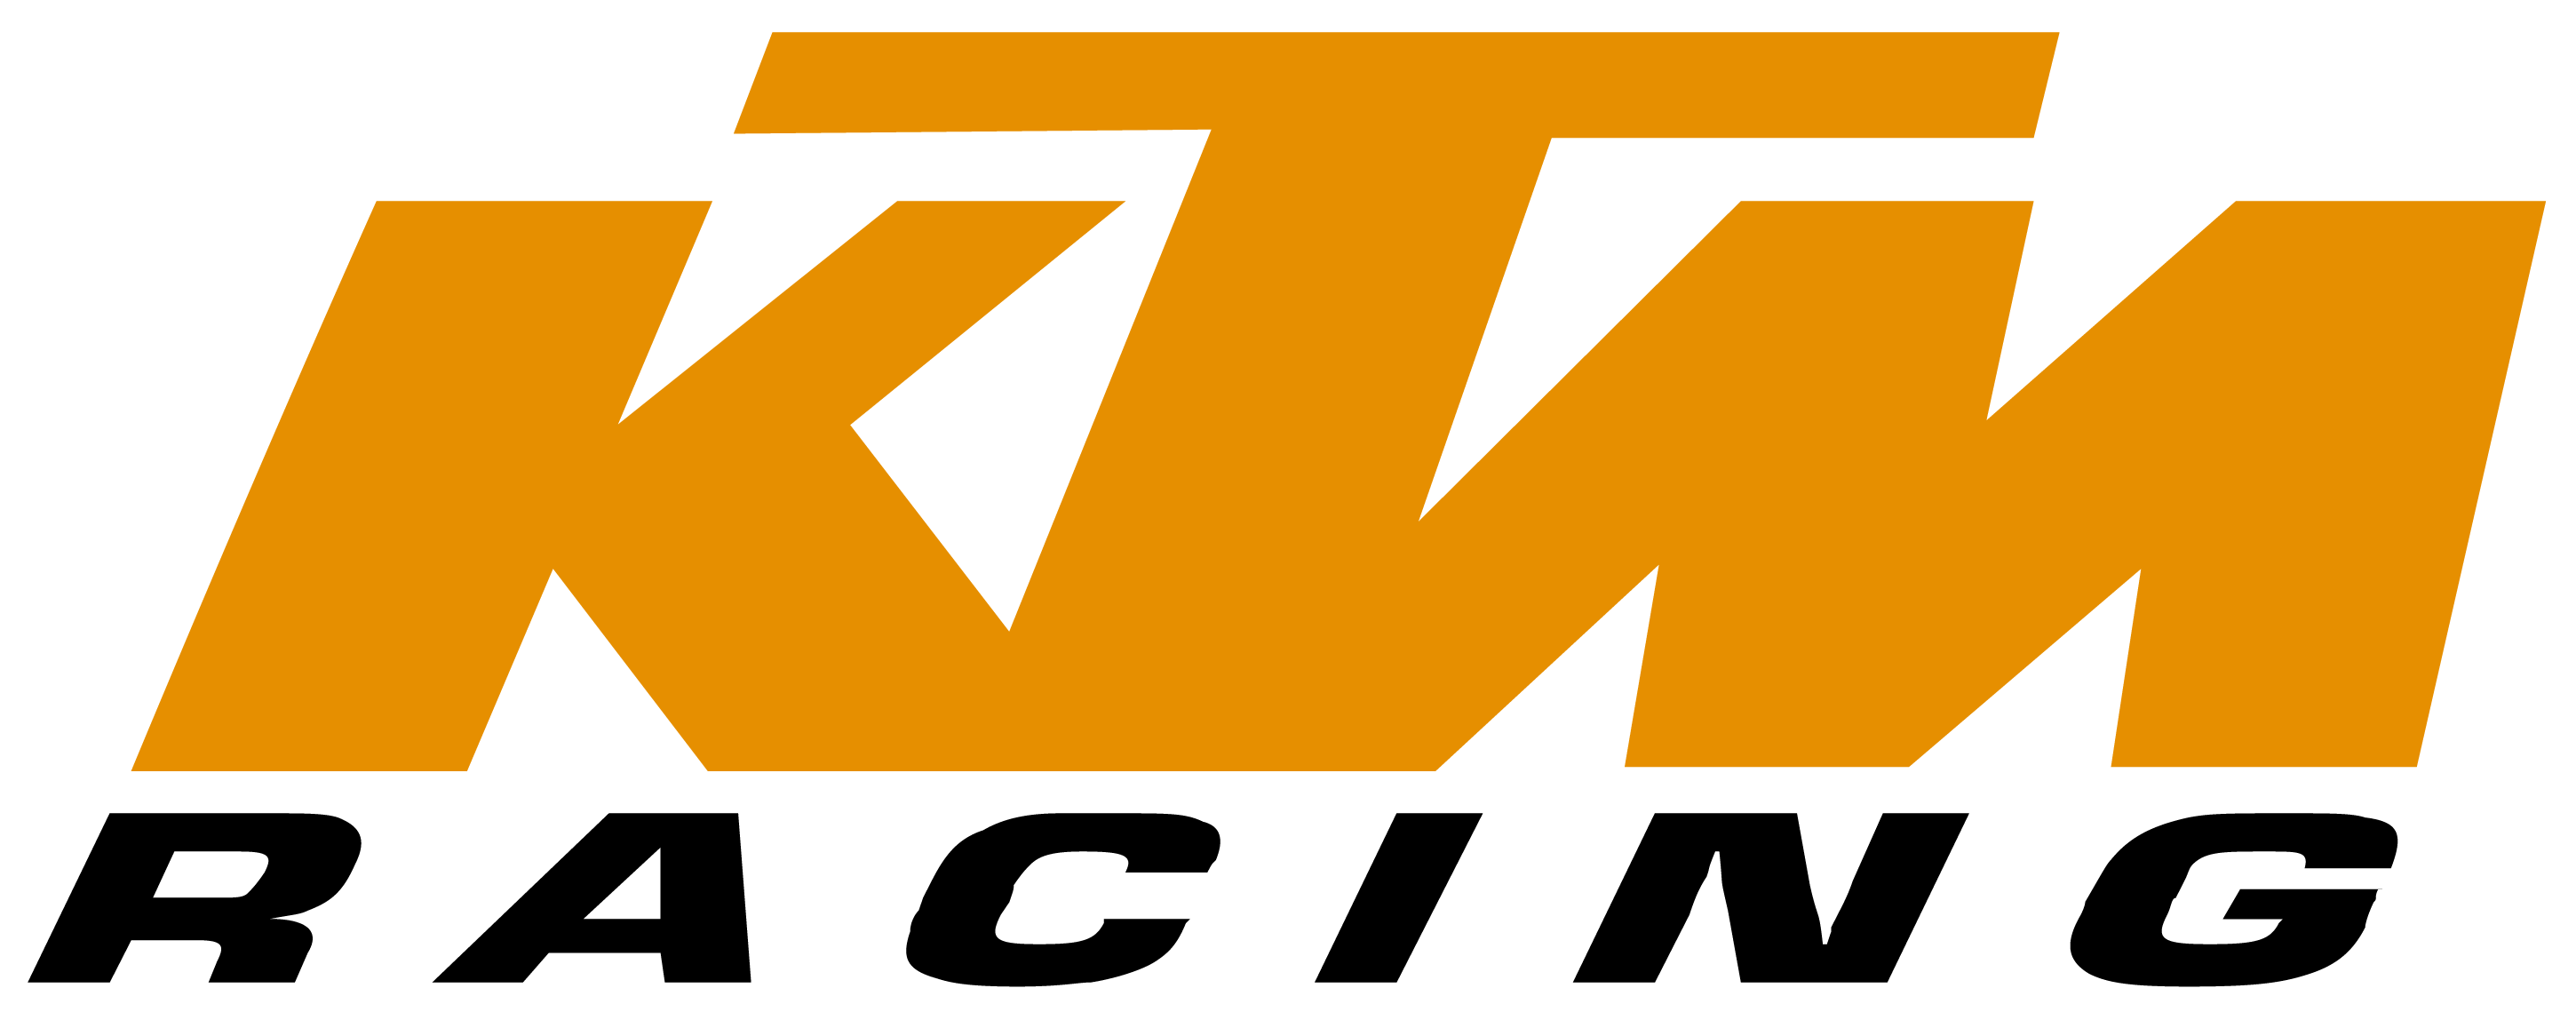 KTM motorcycle logo history and Meaning, bike emblem